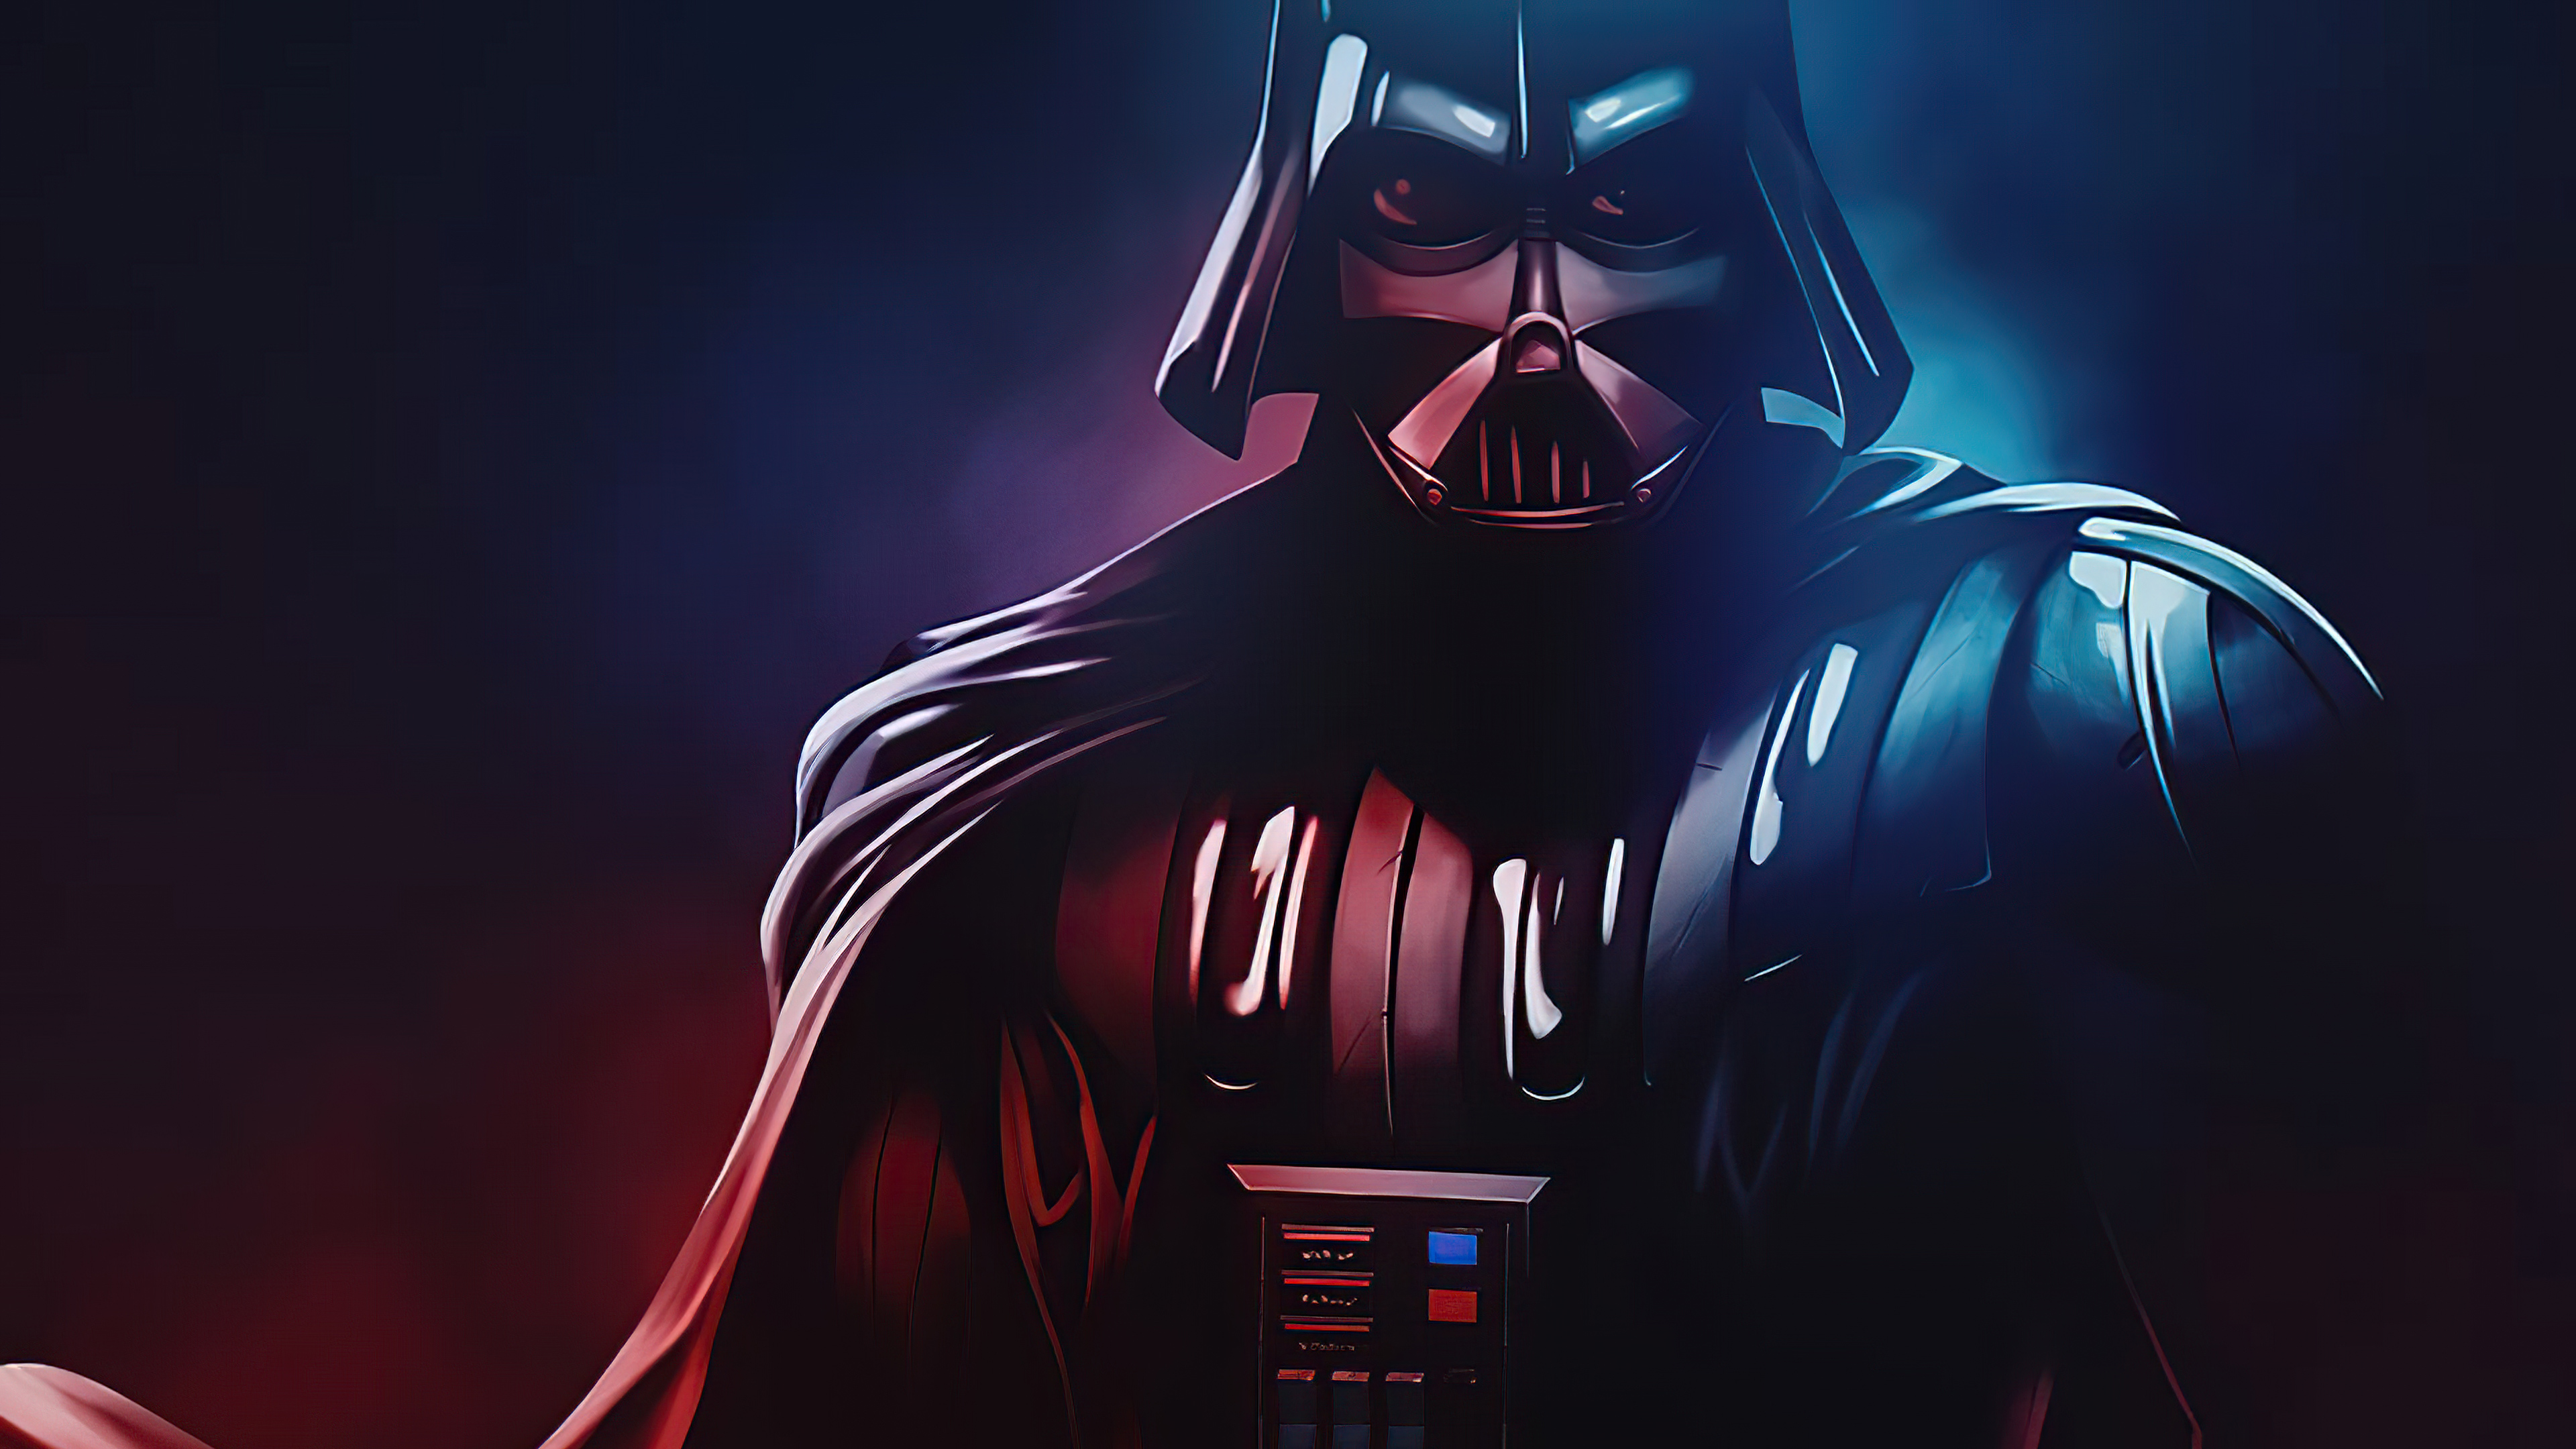 4K Darth Vader Wallpaper and Background Image